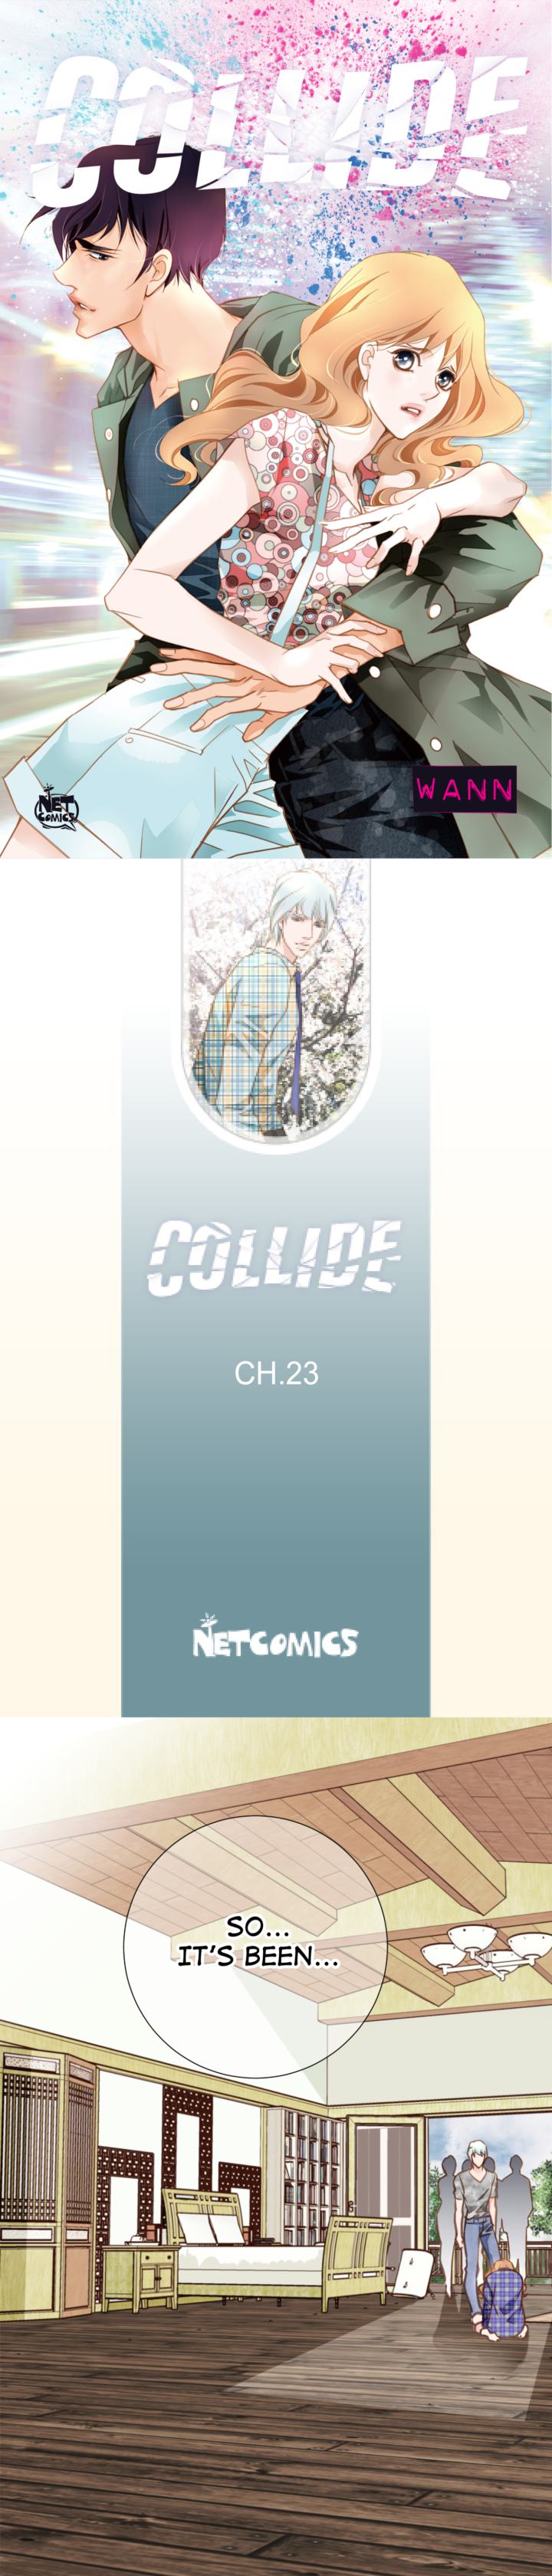 Collide Ch.23